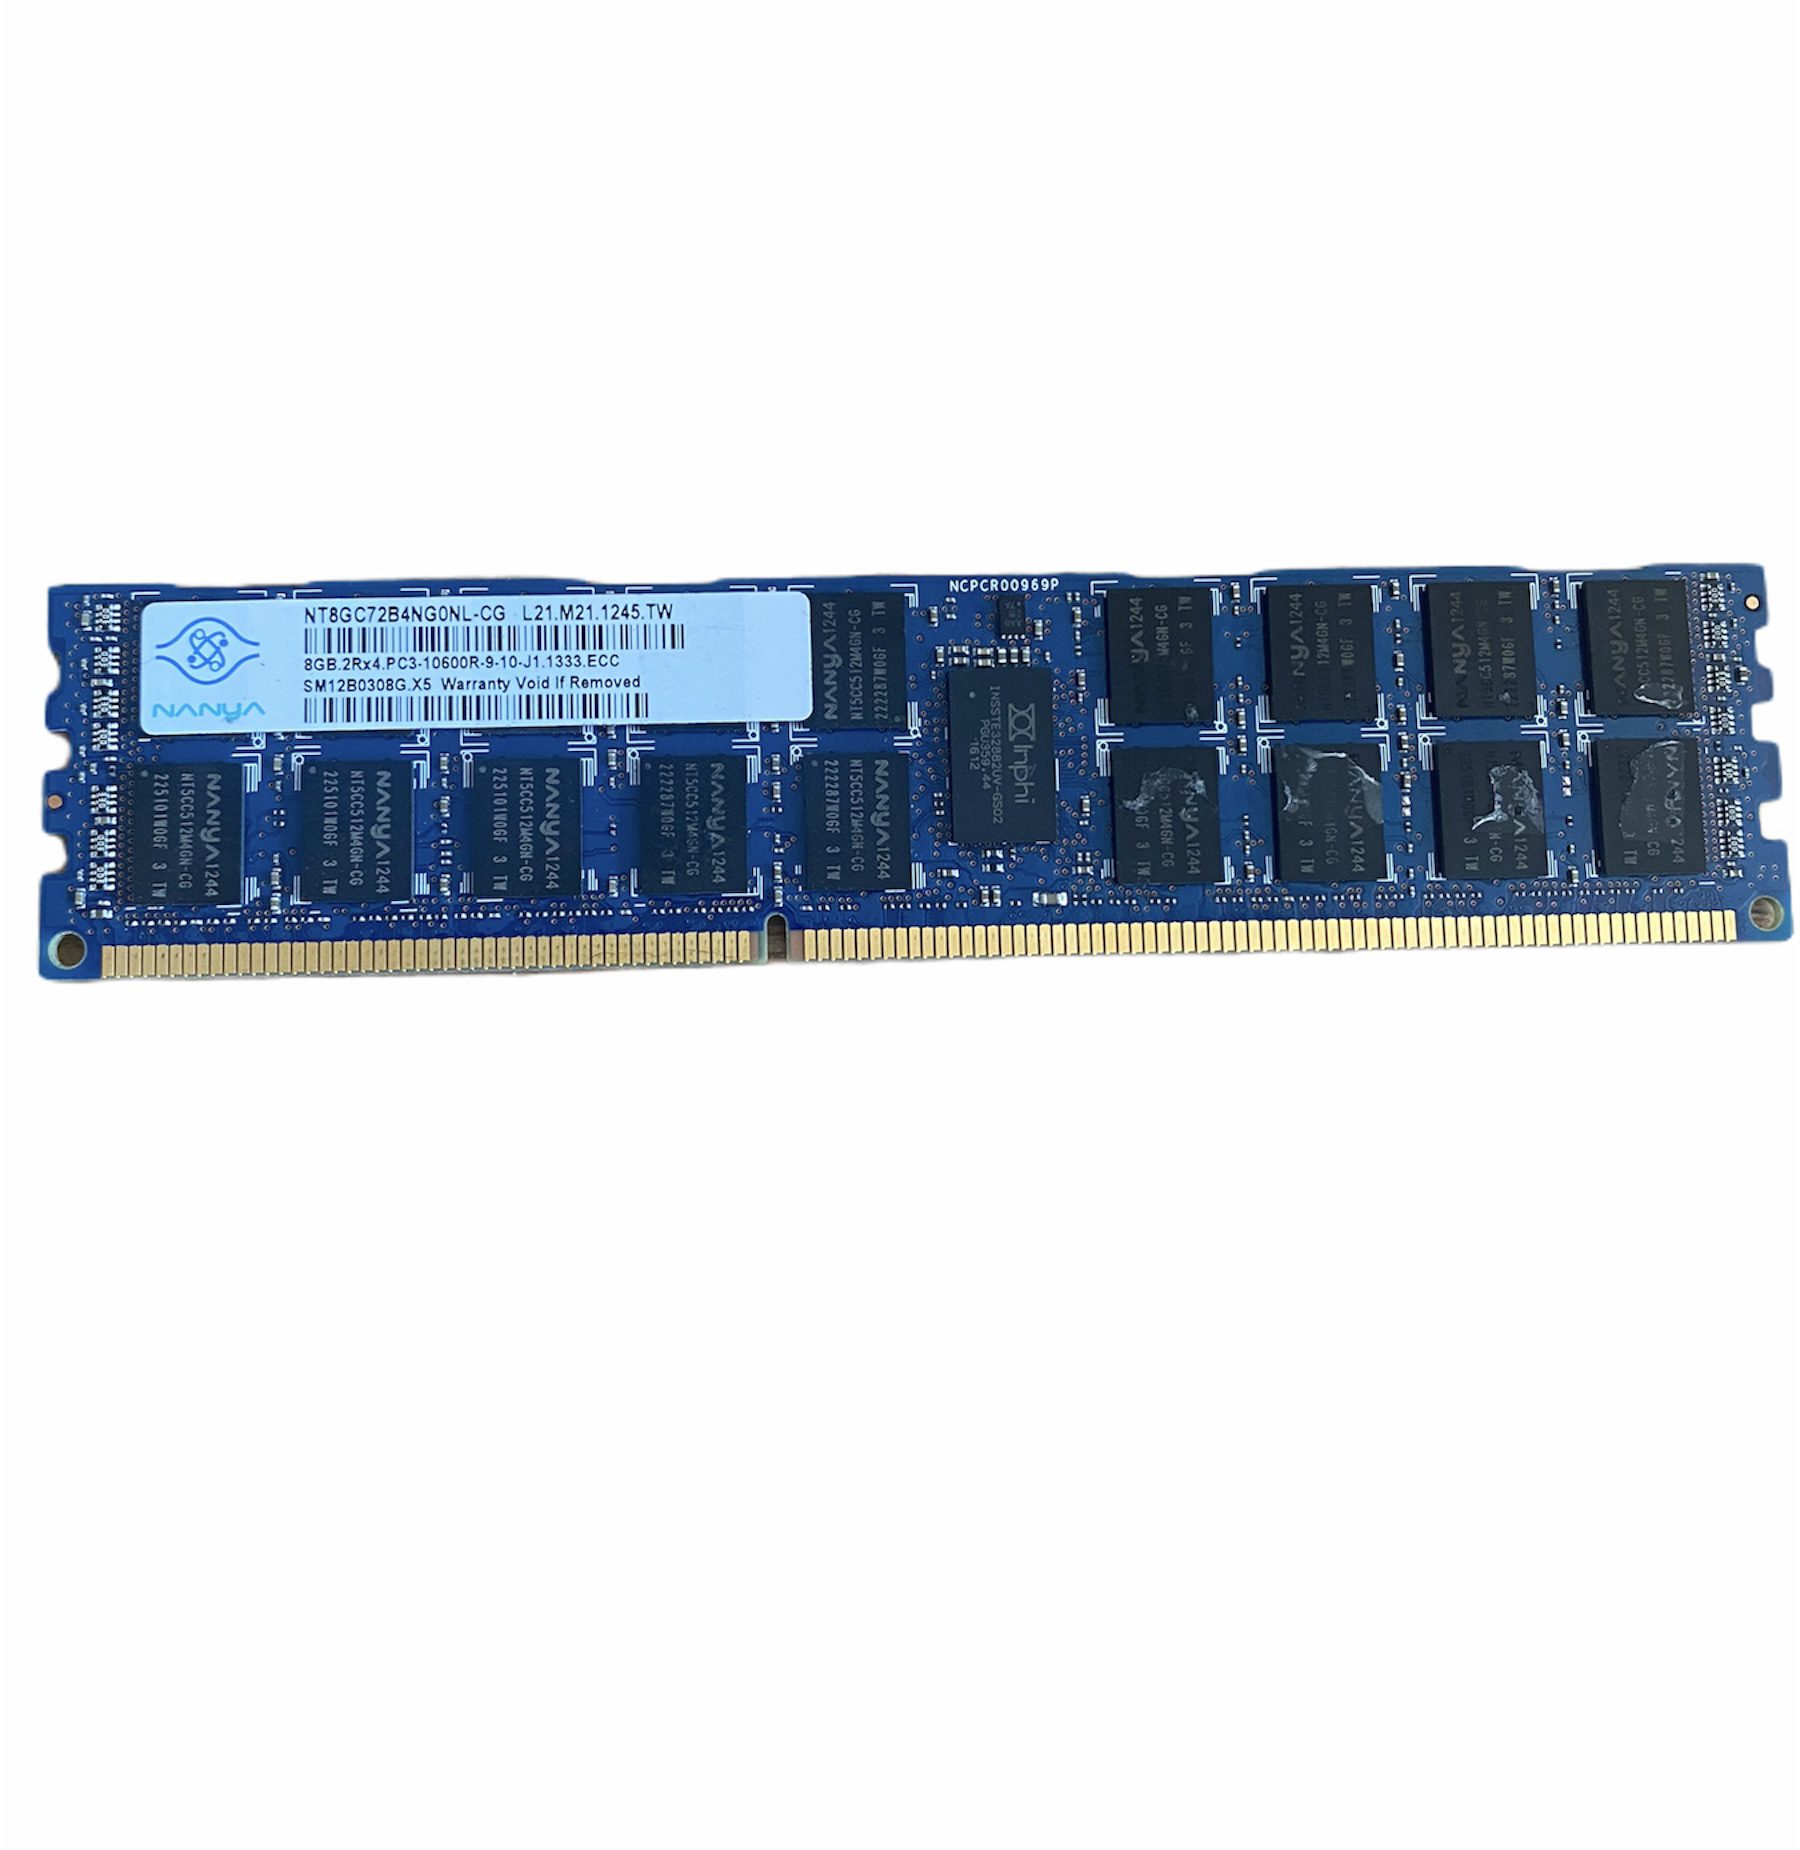 Nanya NT8GC72B4NG0NL-CG 8GB DDR3 PC3-10600R RDIMM